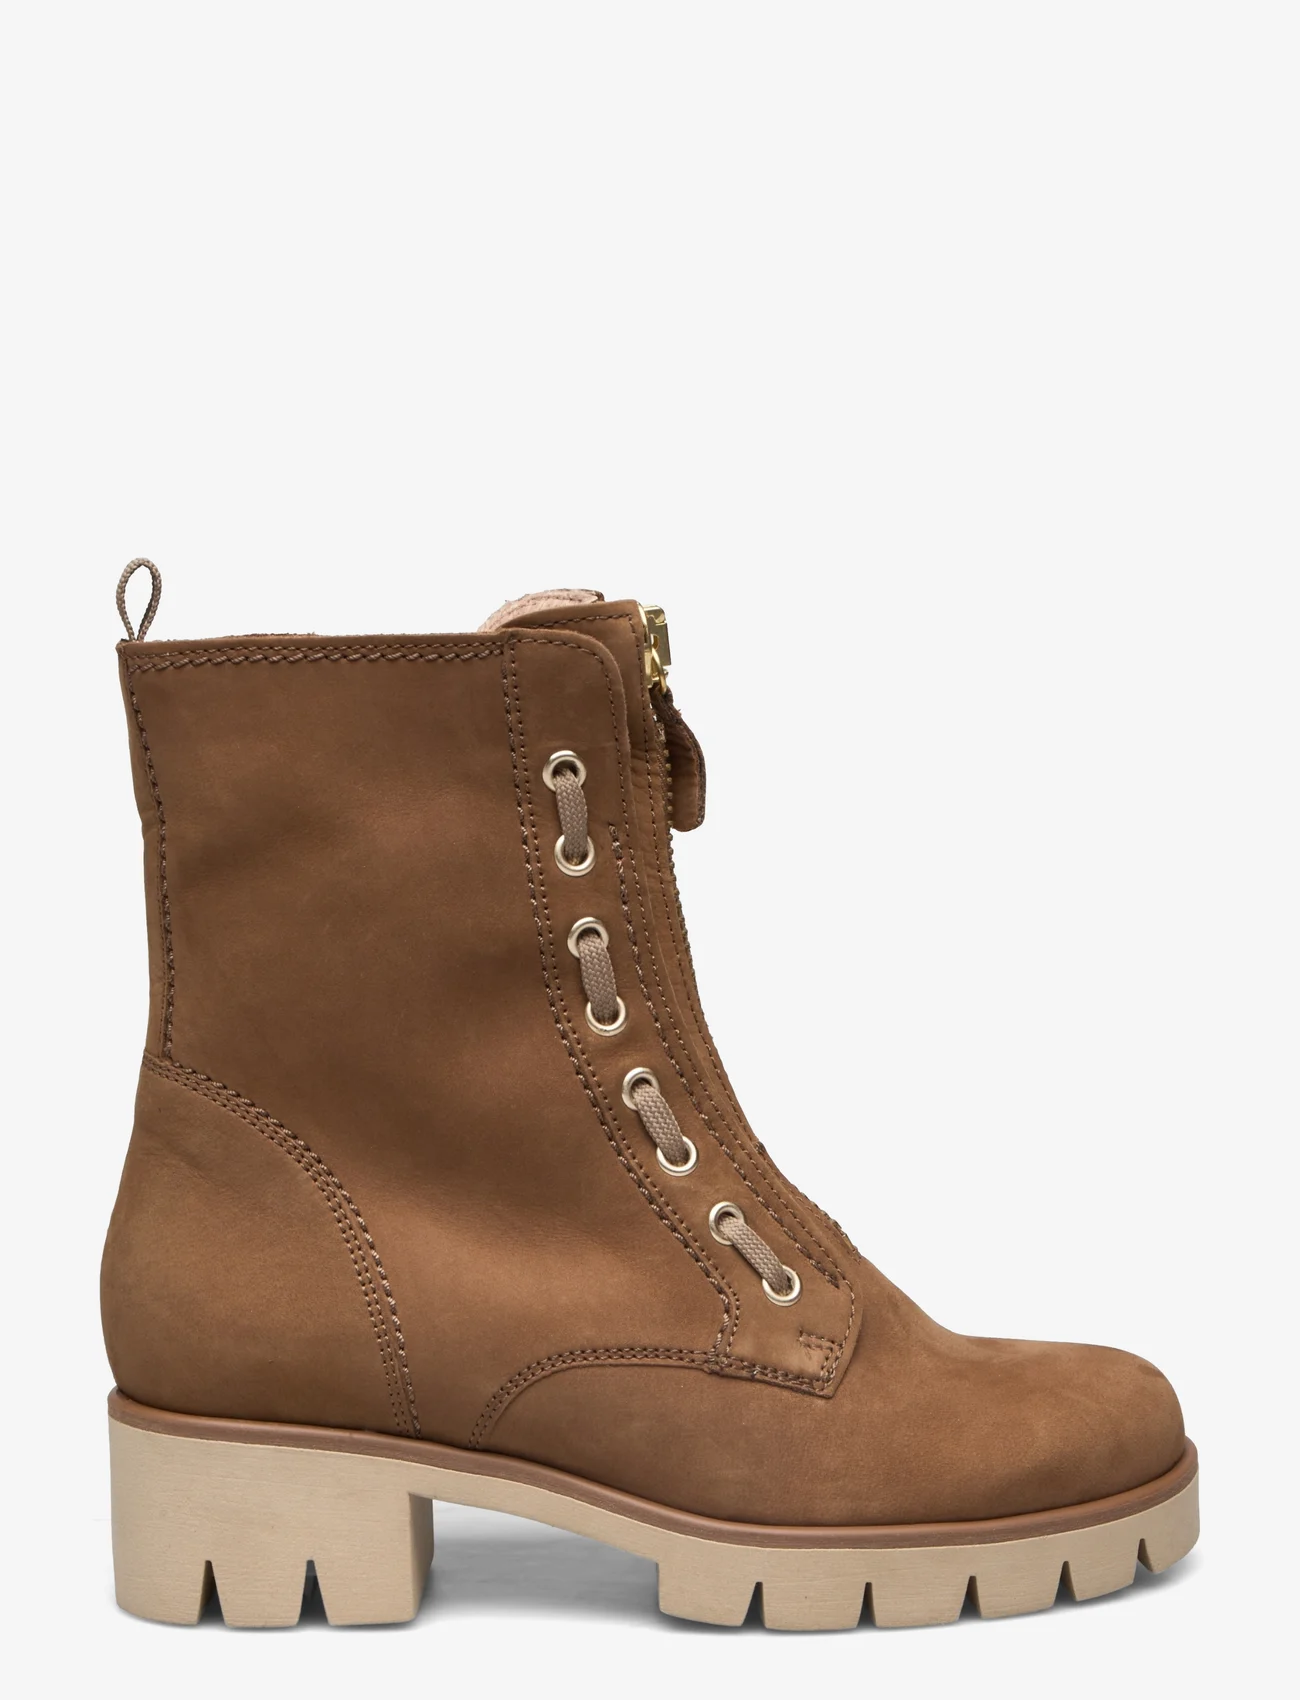 Gabor - Ankle boot - flache stiefeletten - brown - 1